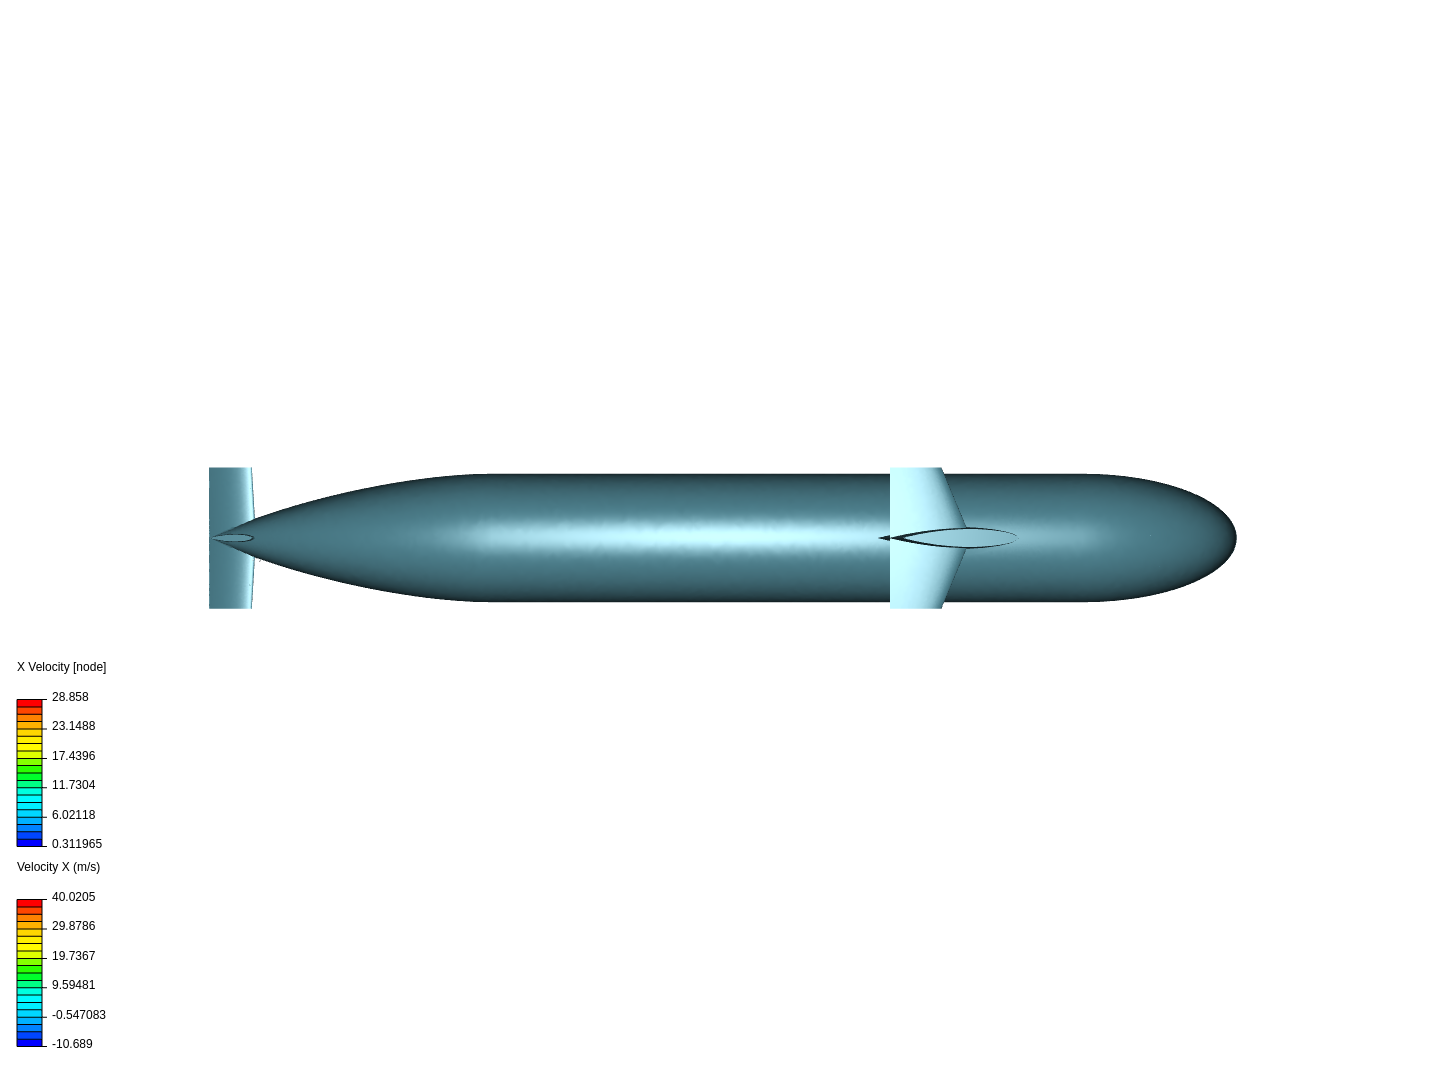 Submarine image